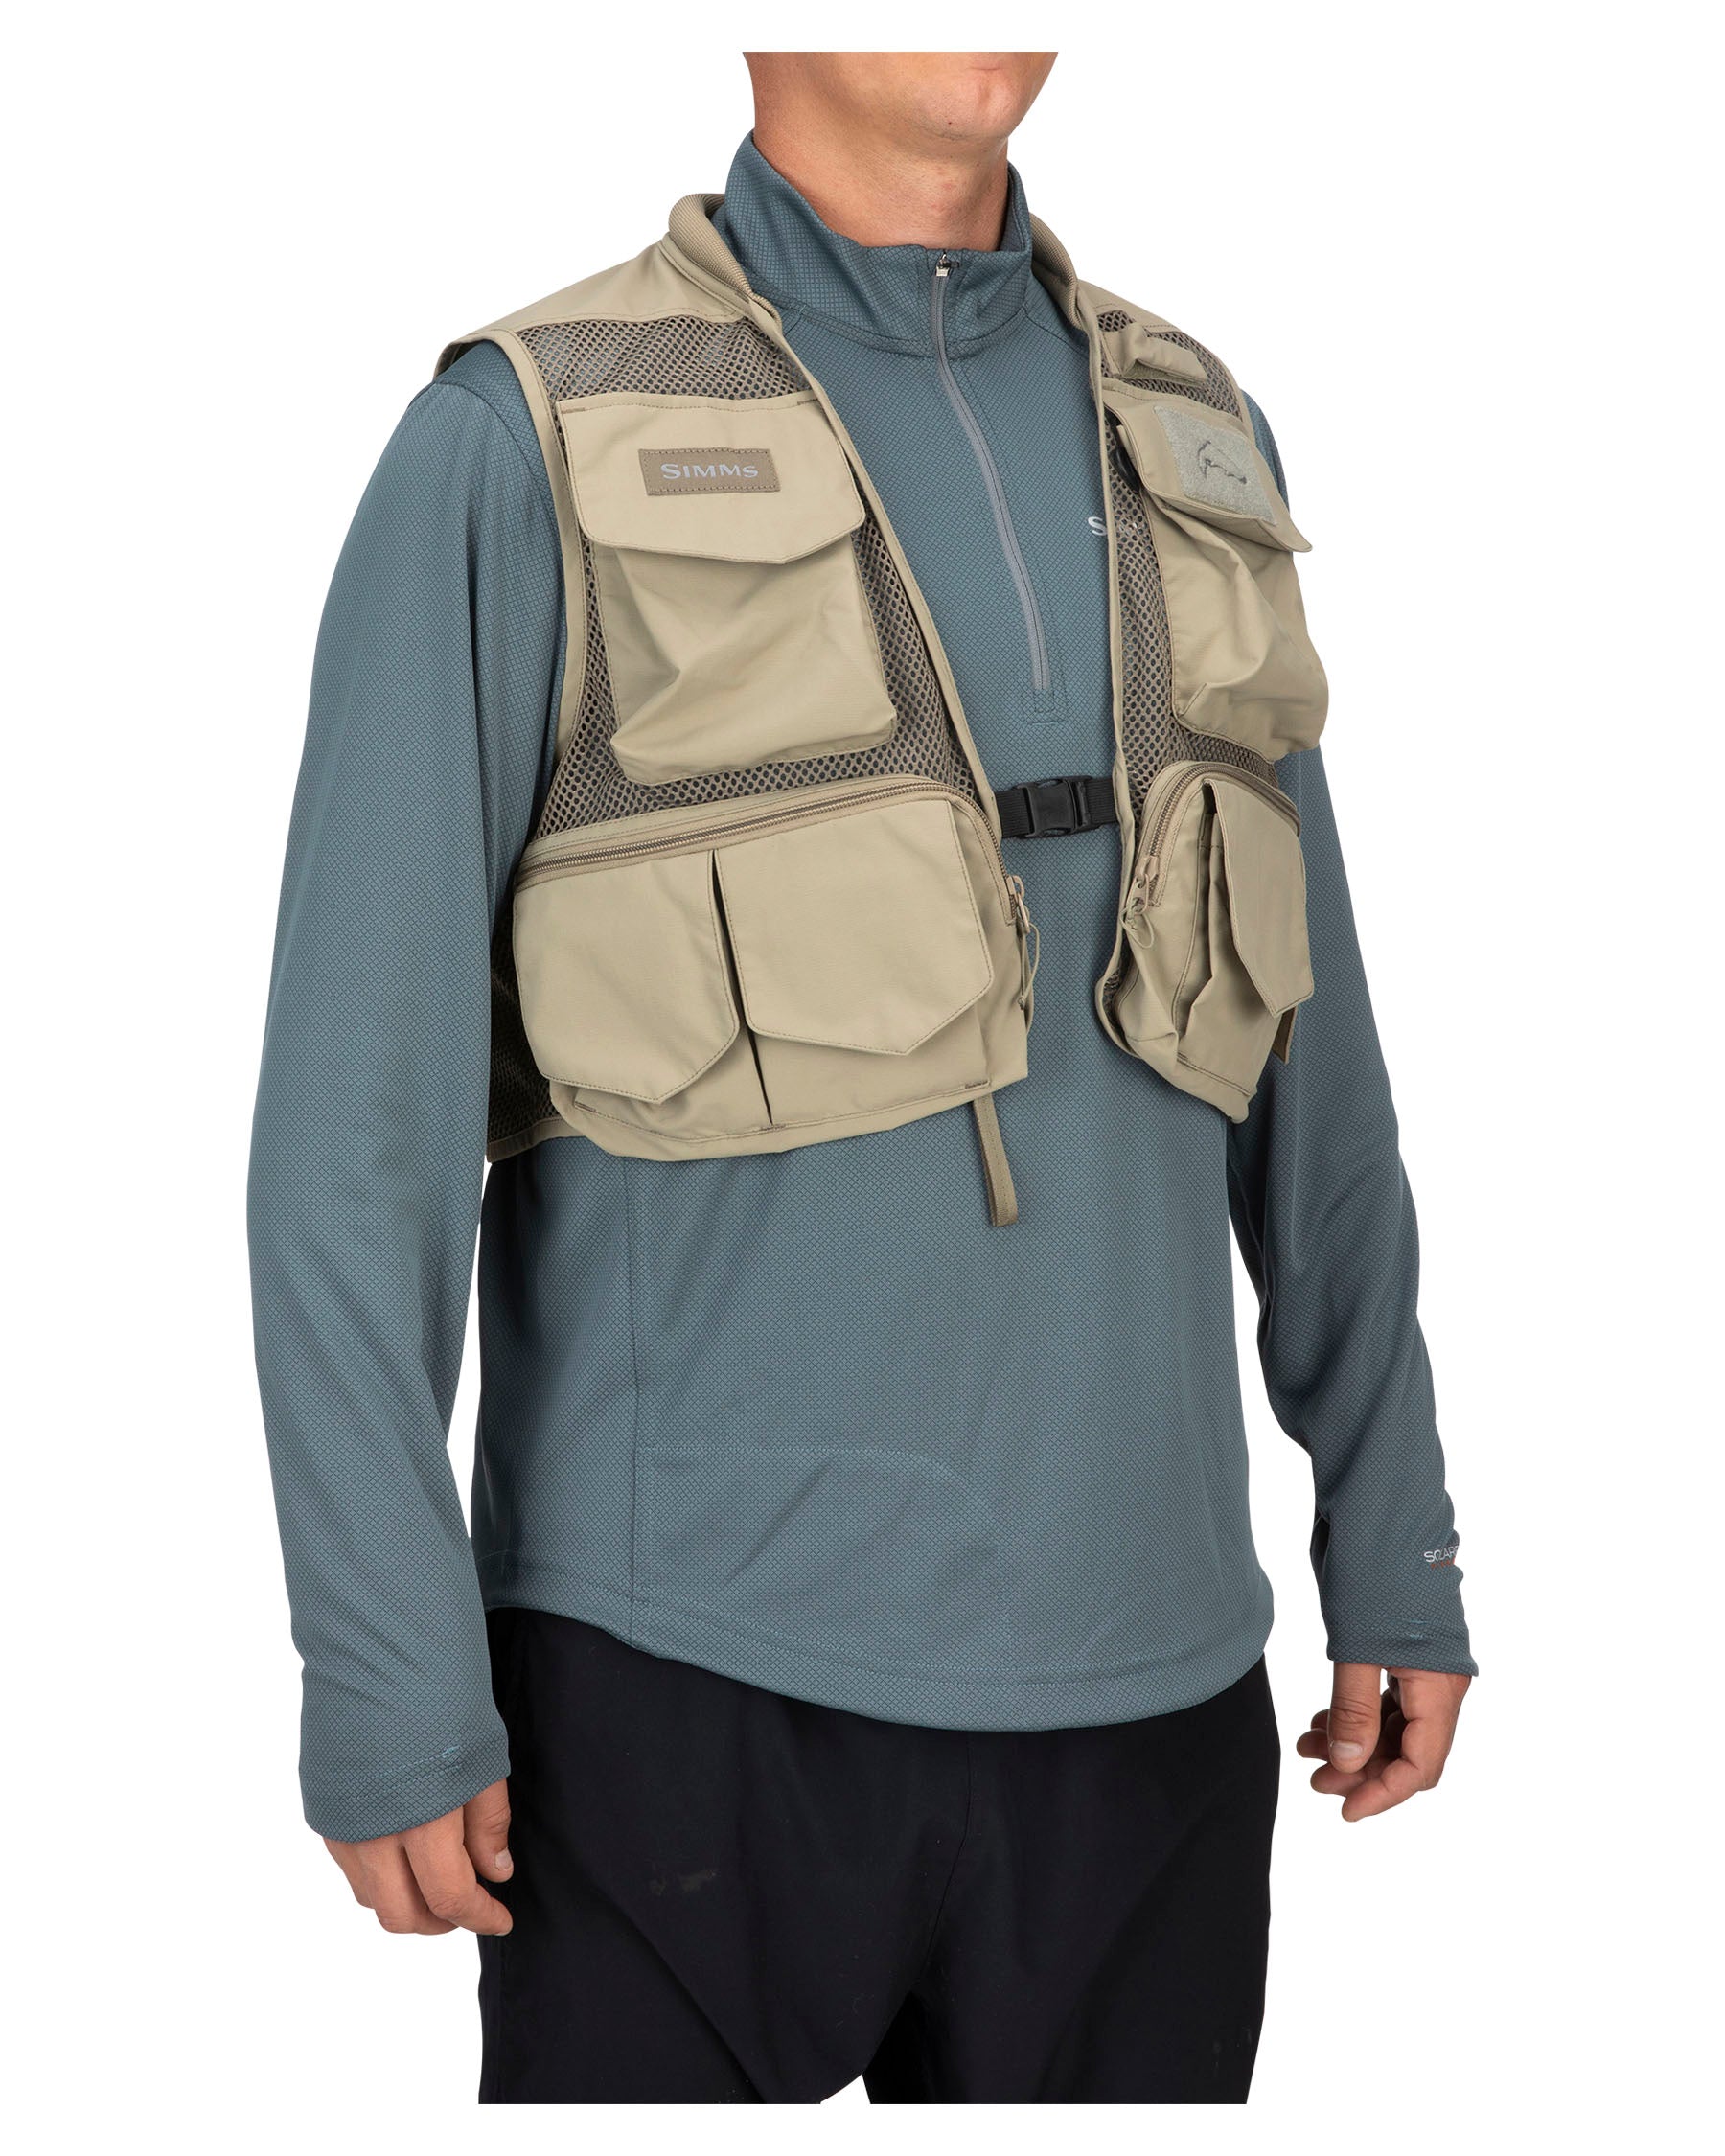 Simms Tributary Fishing Vest M / Tan